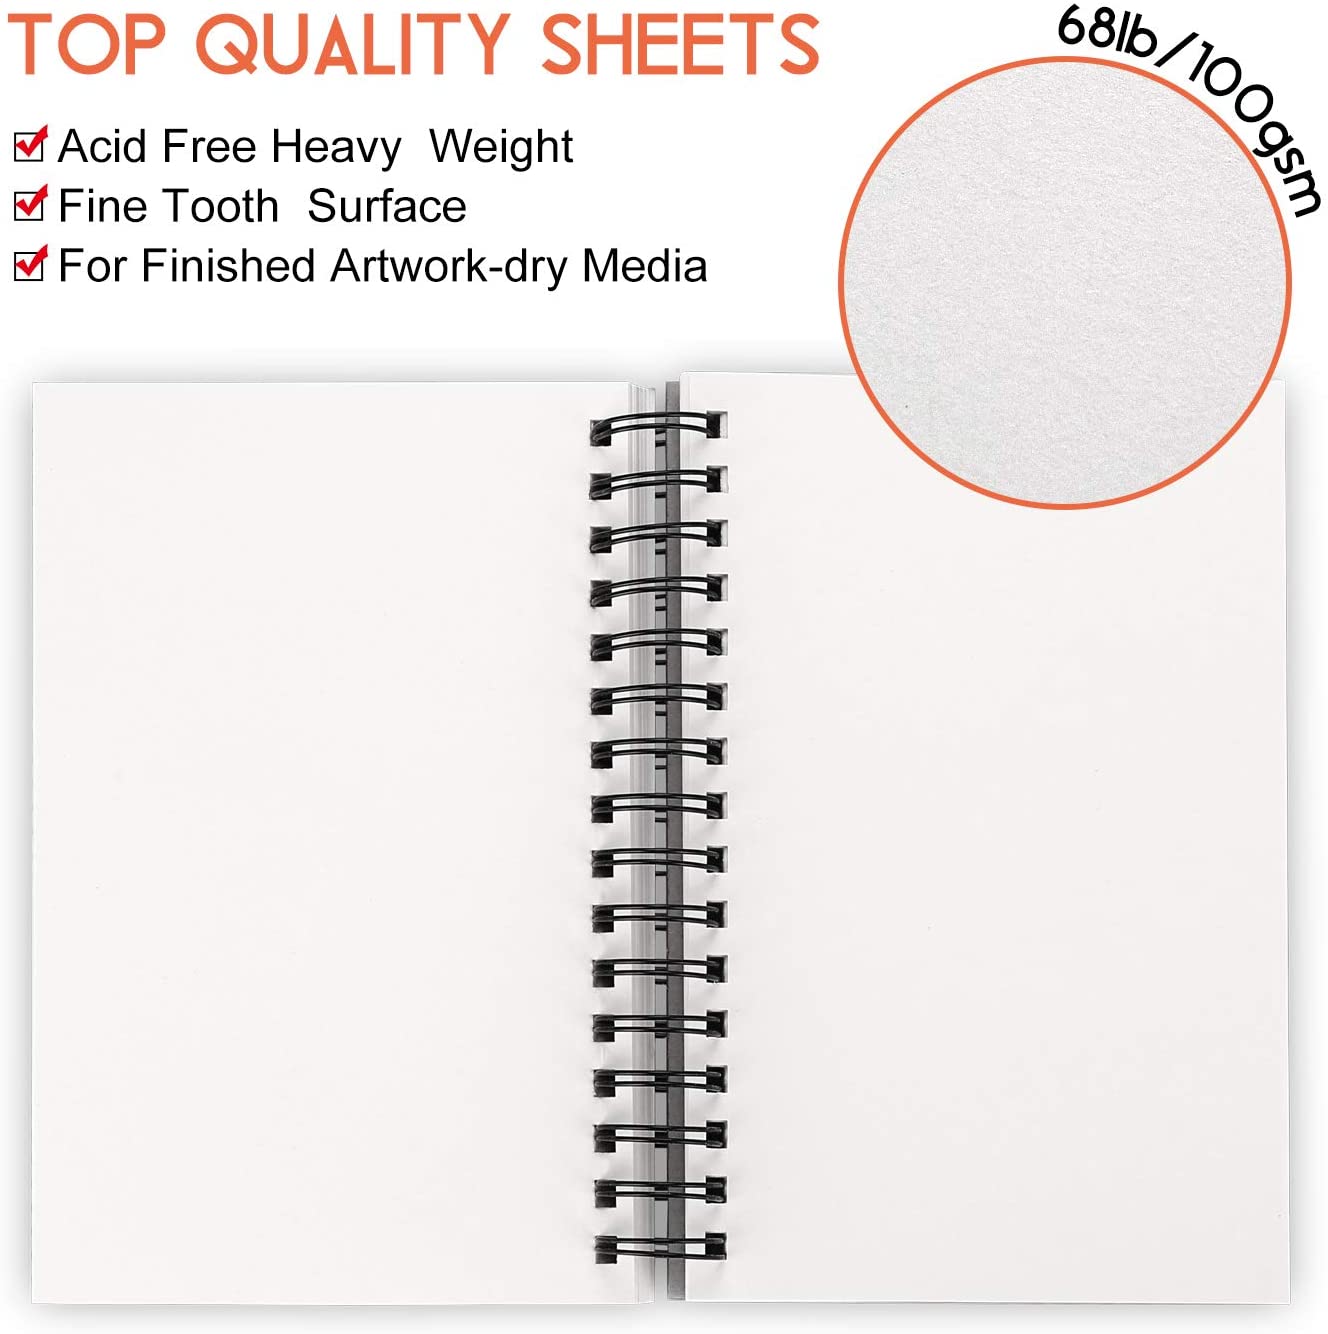 5.5 x 8.5 Sketchbook Set, Top Spiral Bound Sketch Pad, 2 Packs 100-Sheets  Each (68lb/100gsm), Acid Free Art Sketch Book Artistic Drawing Painting